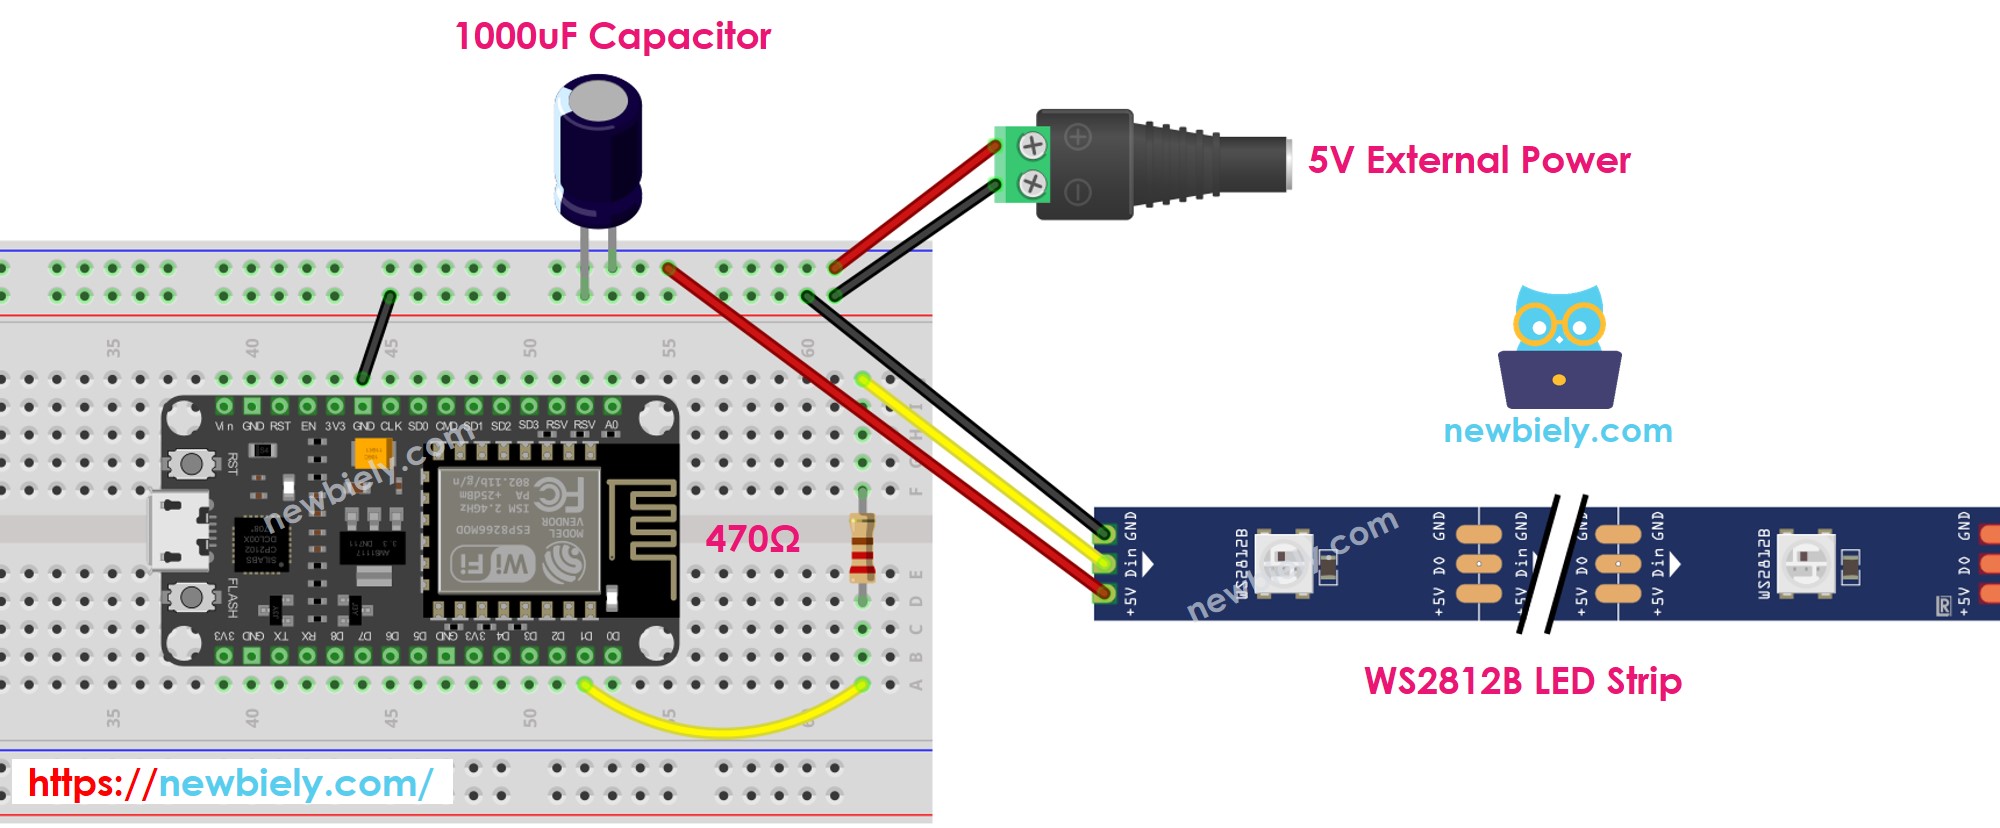 The wiring diagram between ESP8266 NodeMCU and WS2812B RGB LED strip